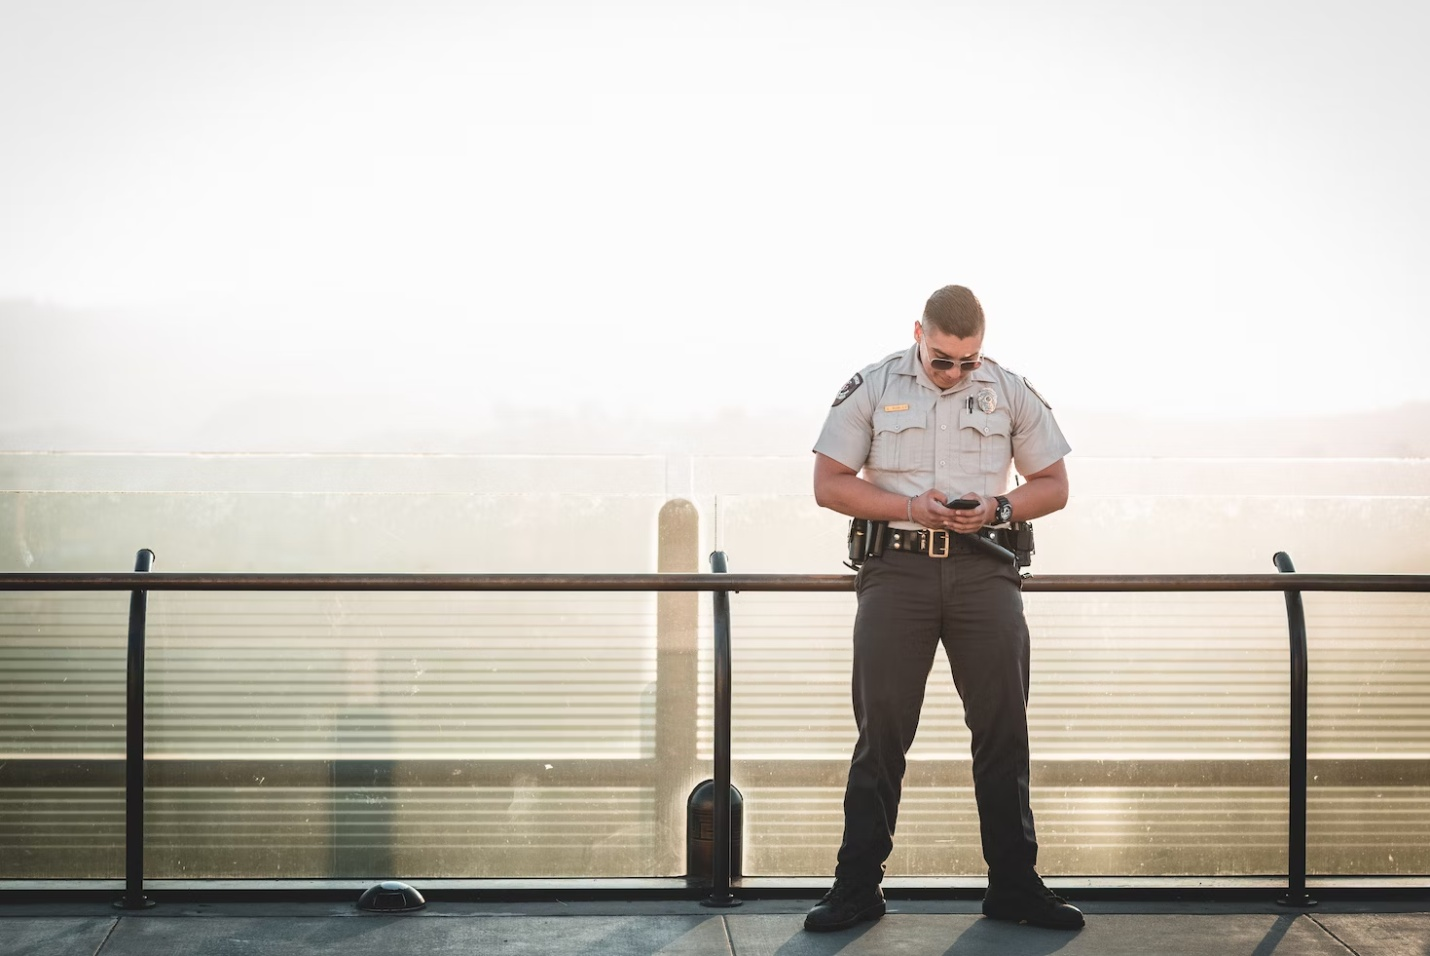 A uniformed security guard on a bridge